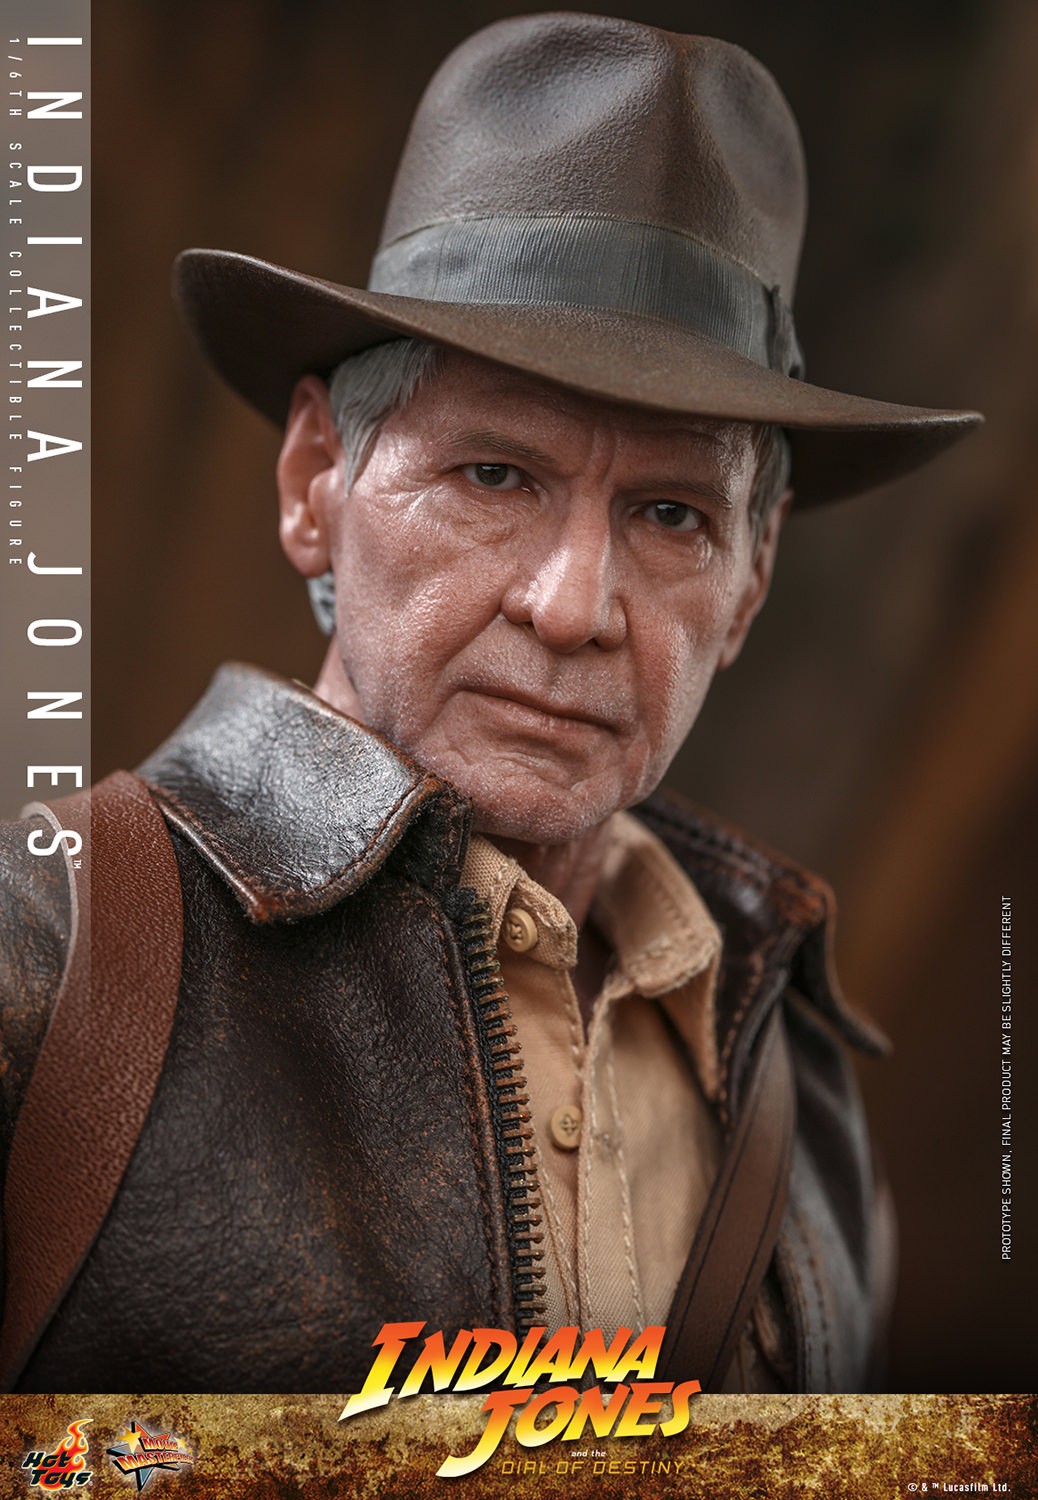 Indiana Jones Collector Edition (Prototype Shown) View 12